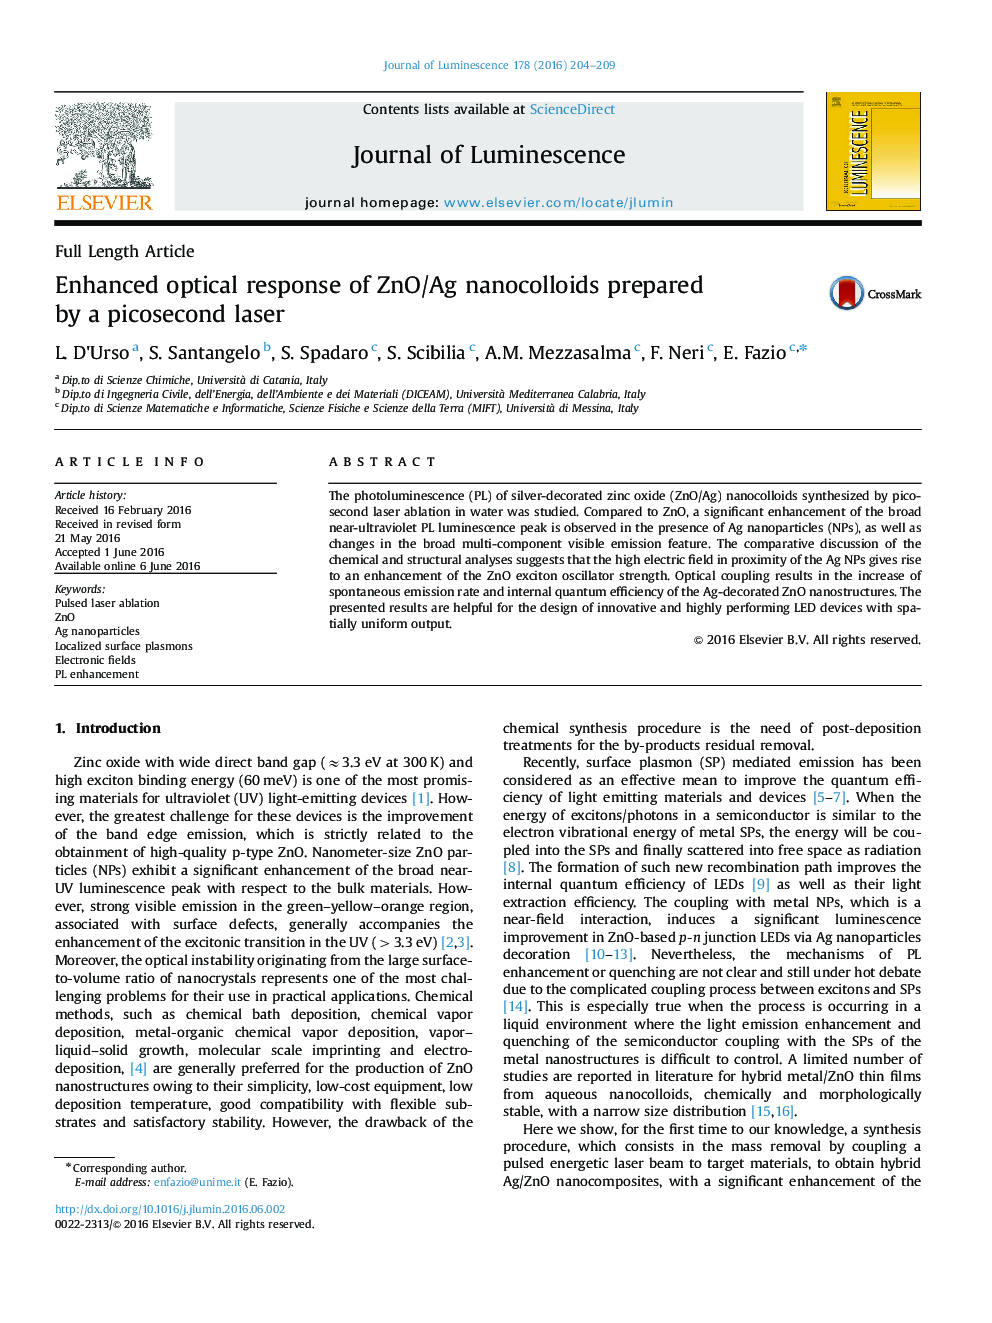 Enhanced optical response of ZnO/Ag nanocolloids prepared by a picosecond laser